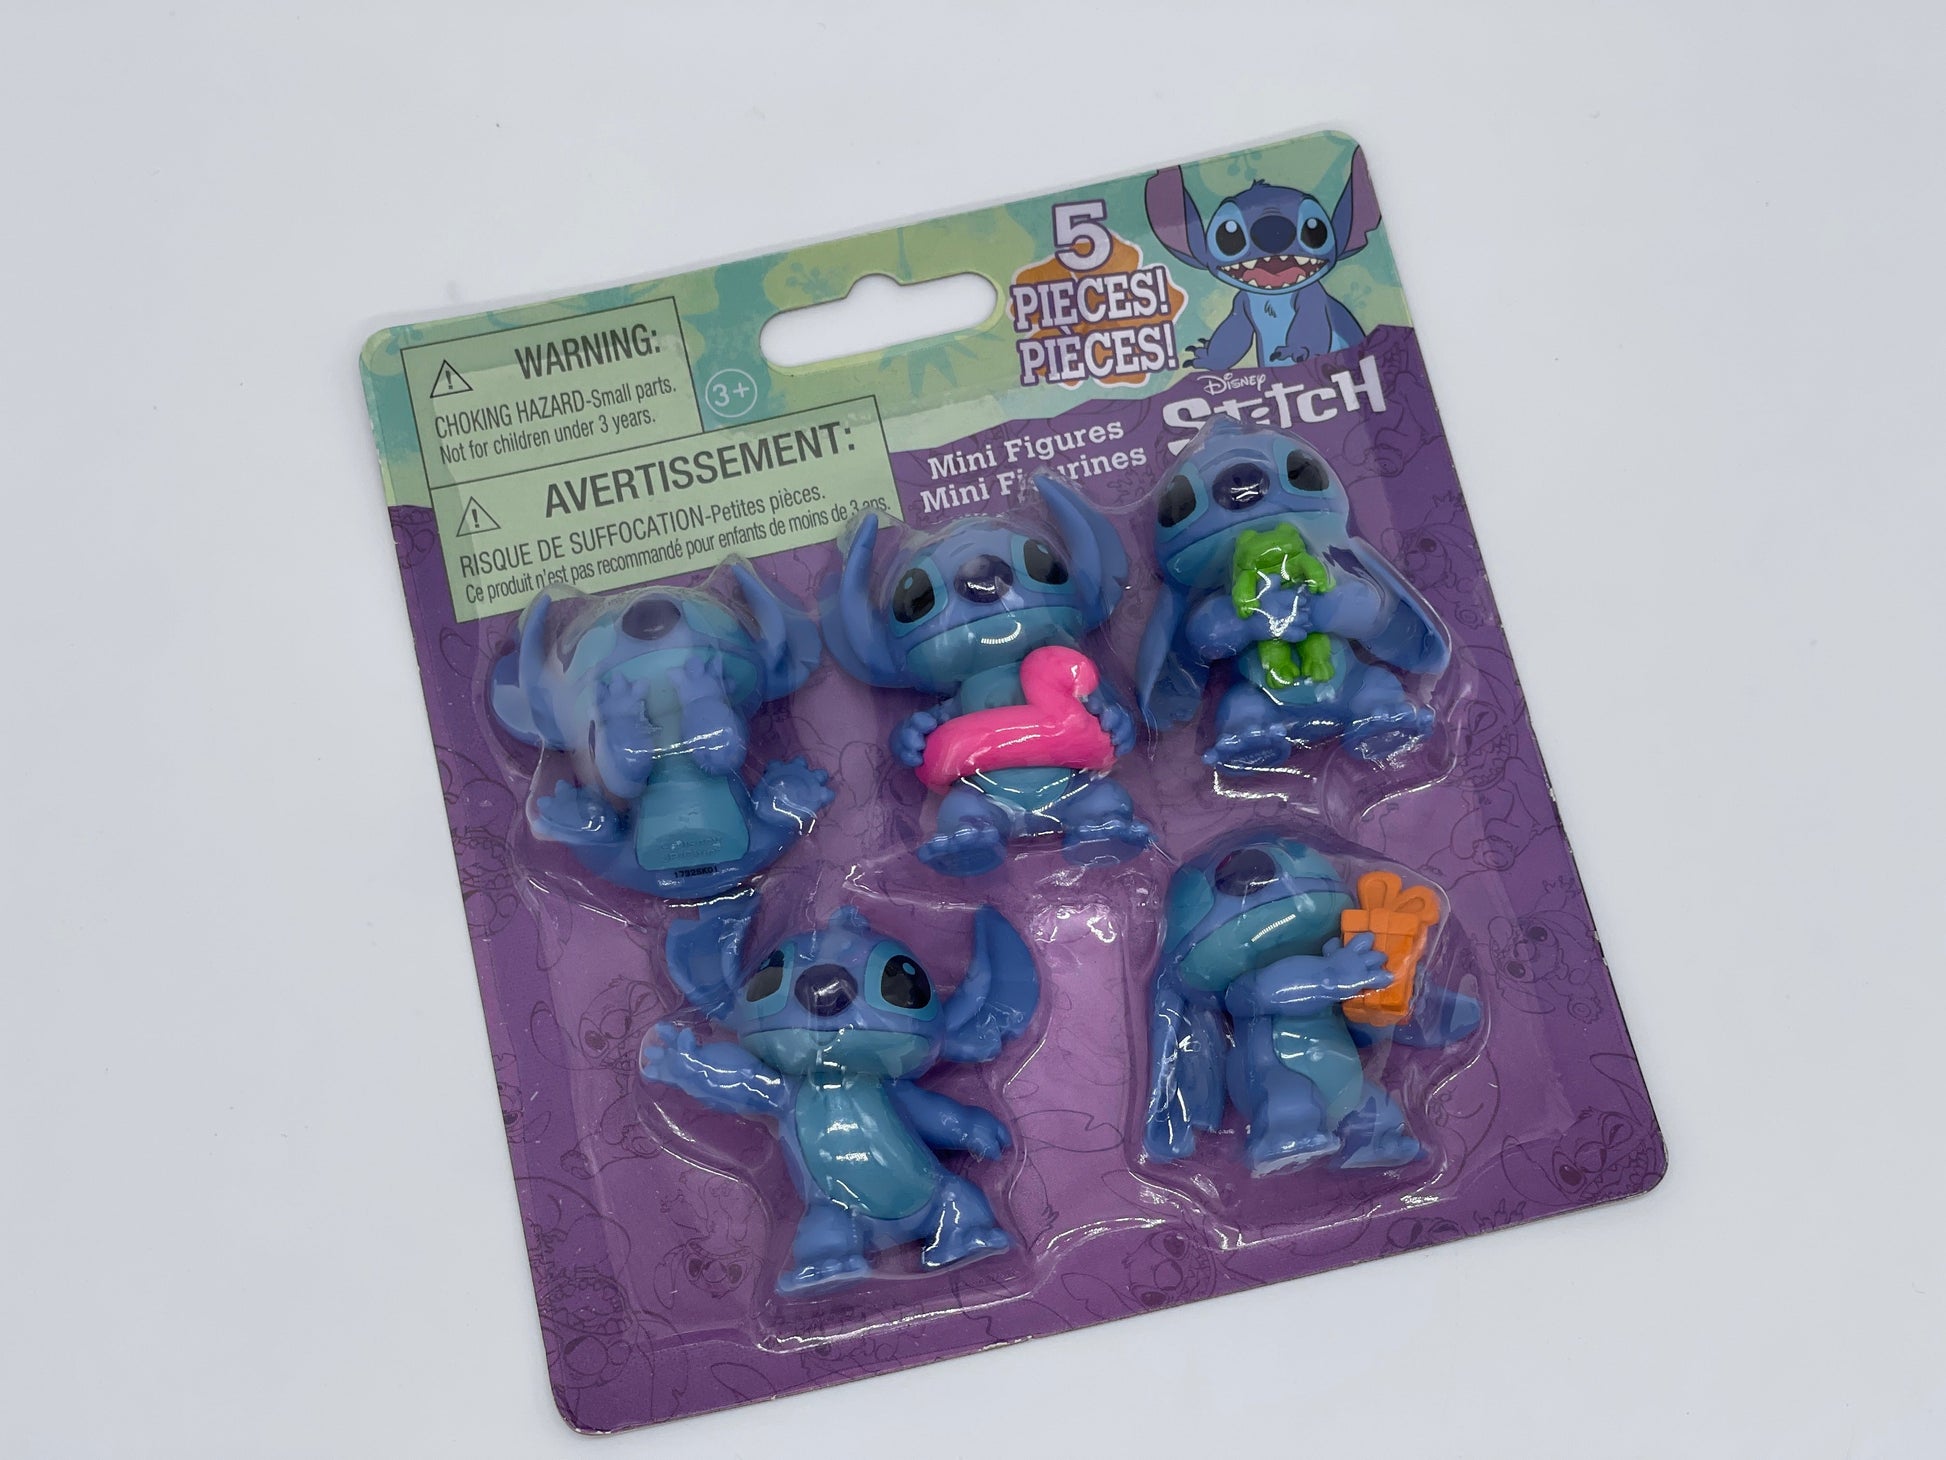 Disney's Lilo & Stitch Collectible Stitch Figure Set, 5-pieces